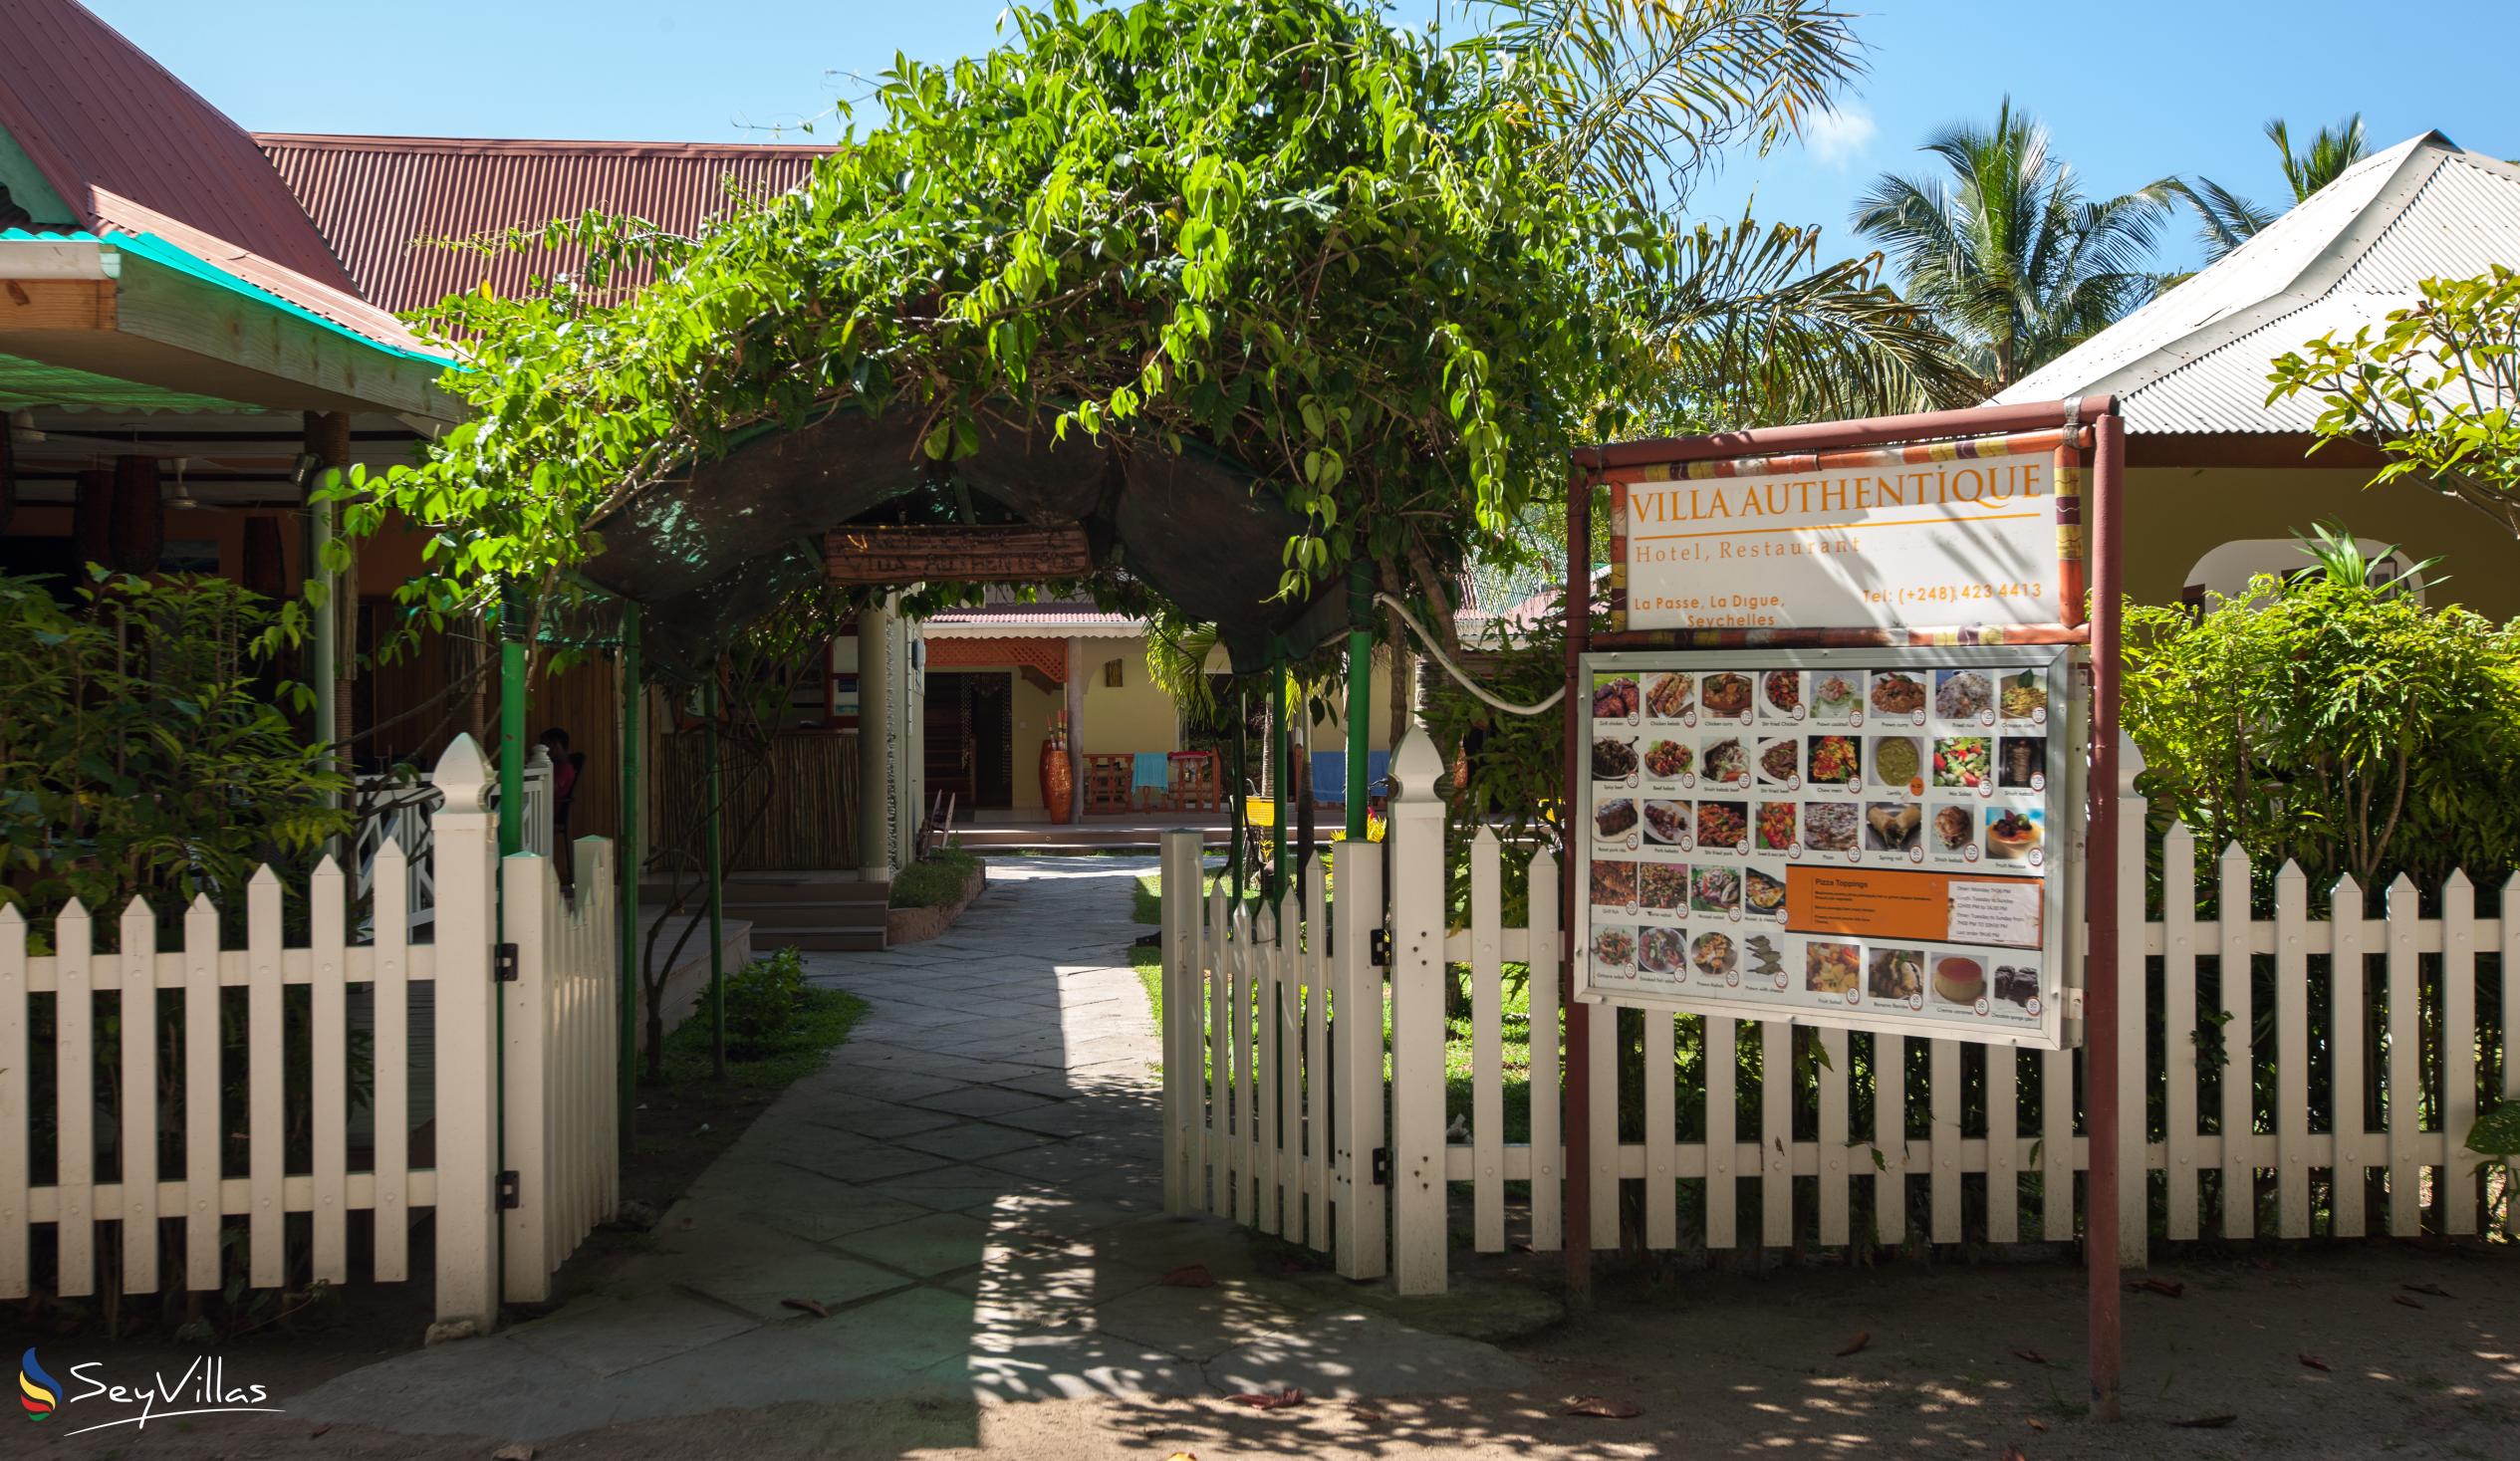 Foto 4: Villa Authentique - Esterno - La Digue (Seychelles)